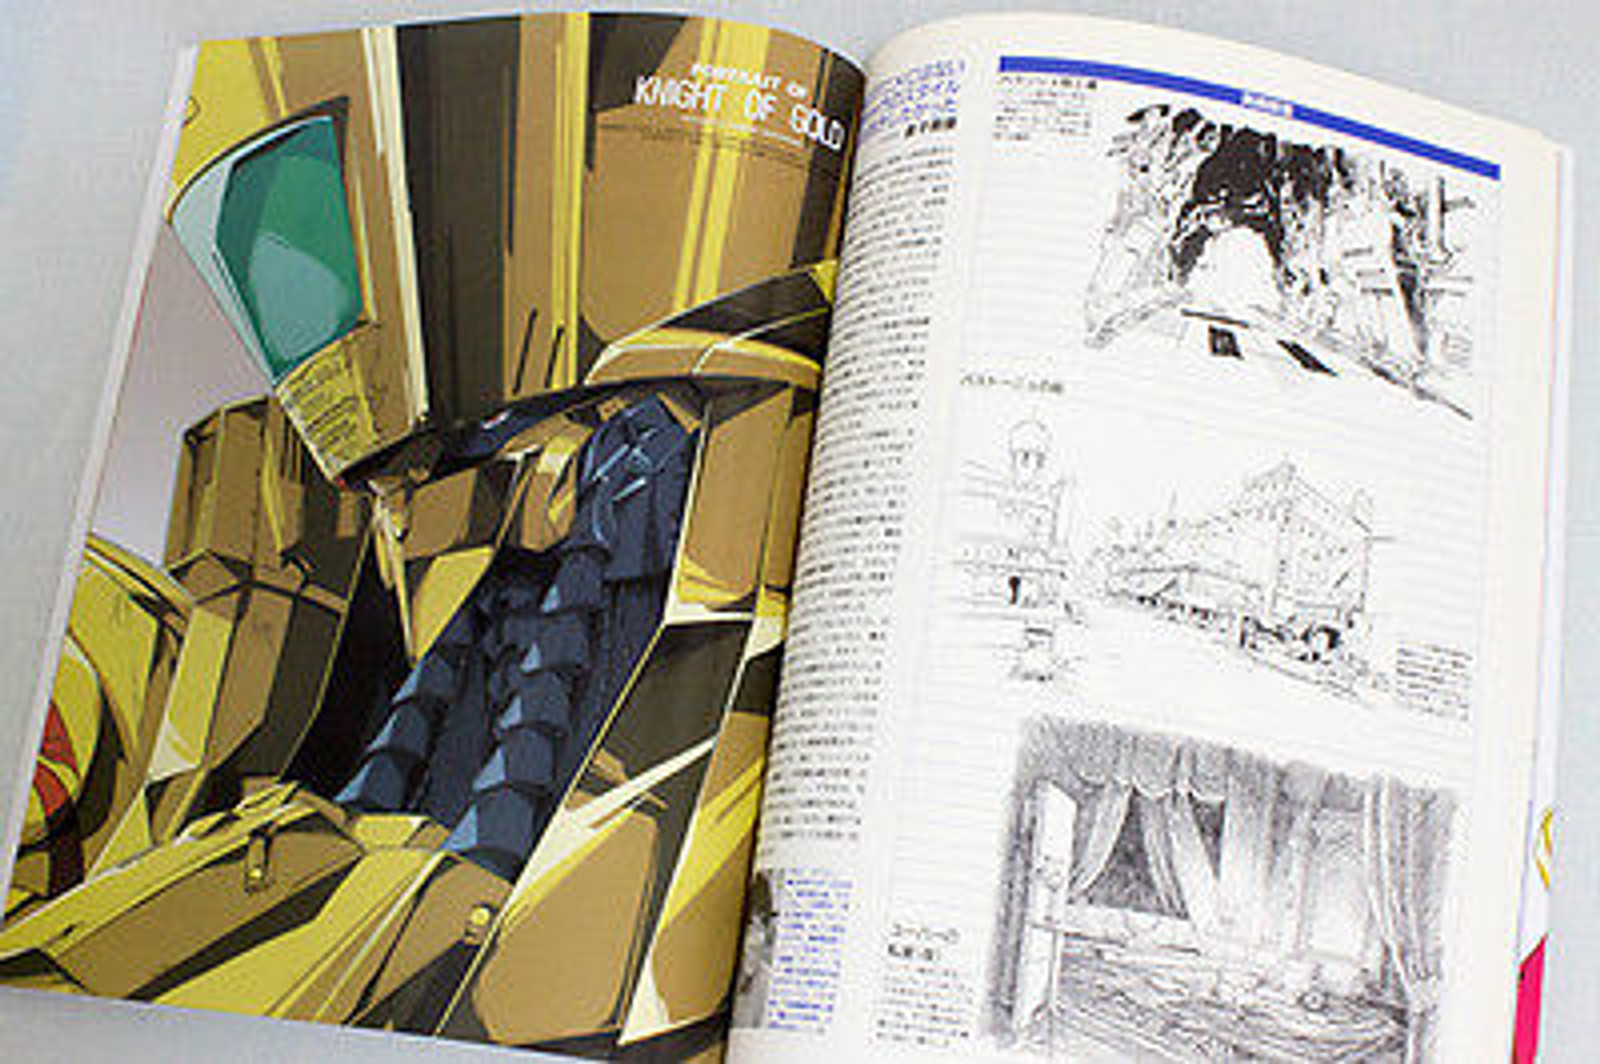 F.S.S.DESIGNS EASTER A.K.D. Five Star Story Art Book Mamoru Nagano JAPAN  ANIME